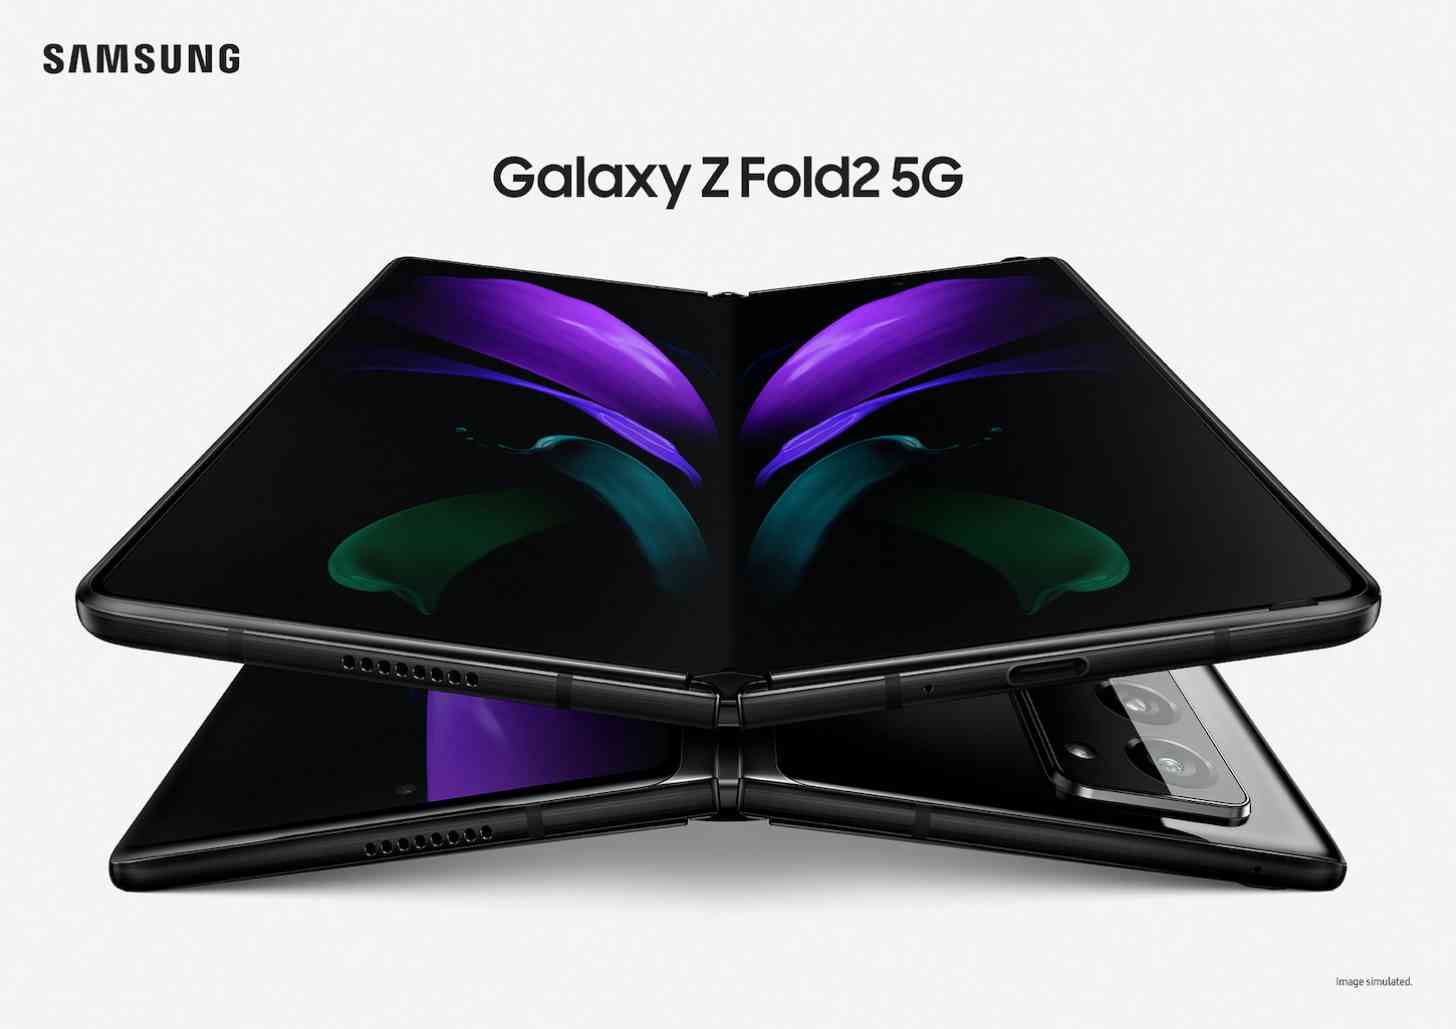 Samsung Galaxy Z Fold 2 open